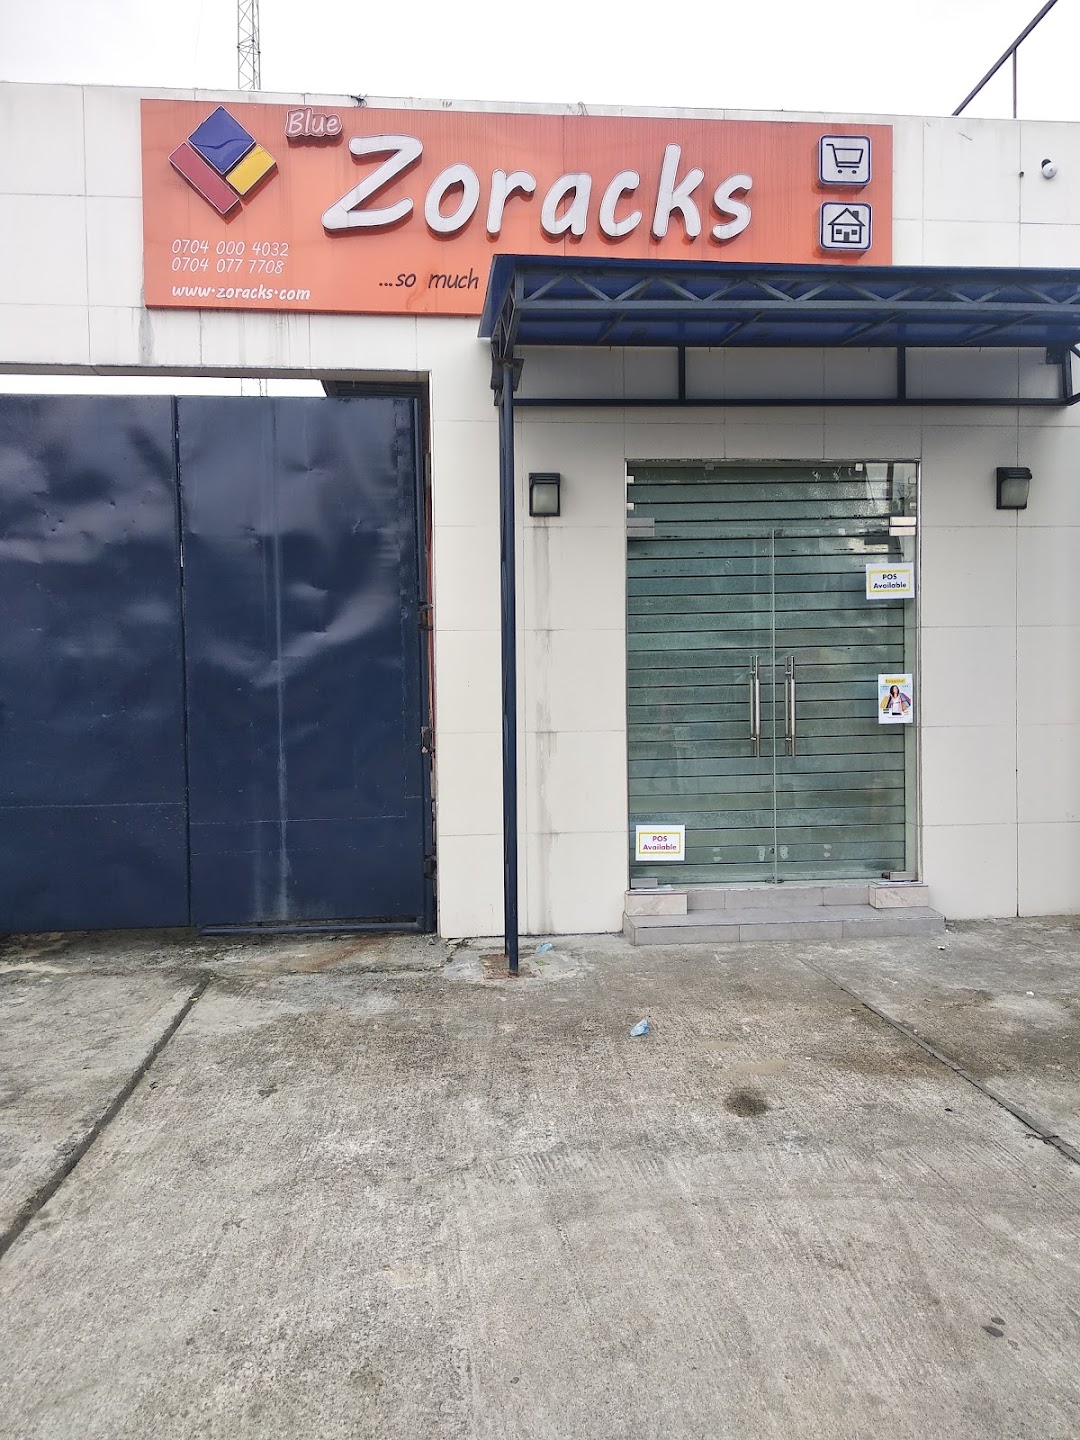 Zoracks Enterprises